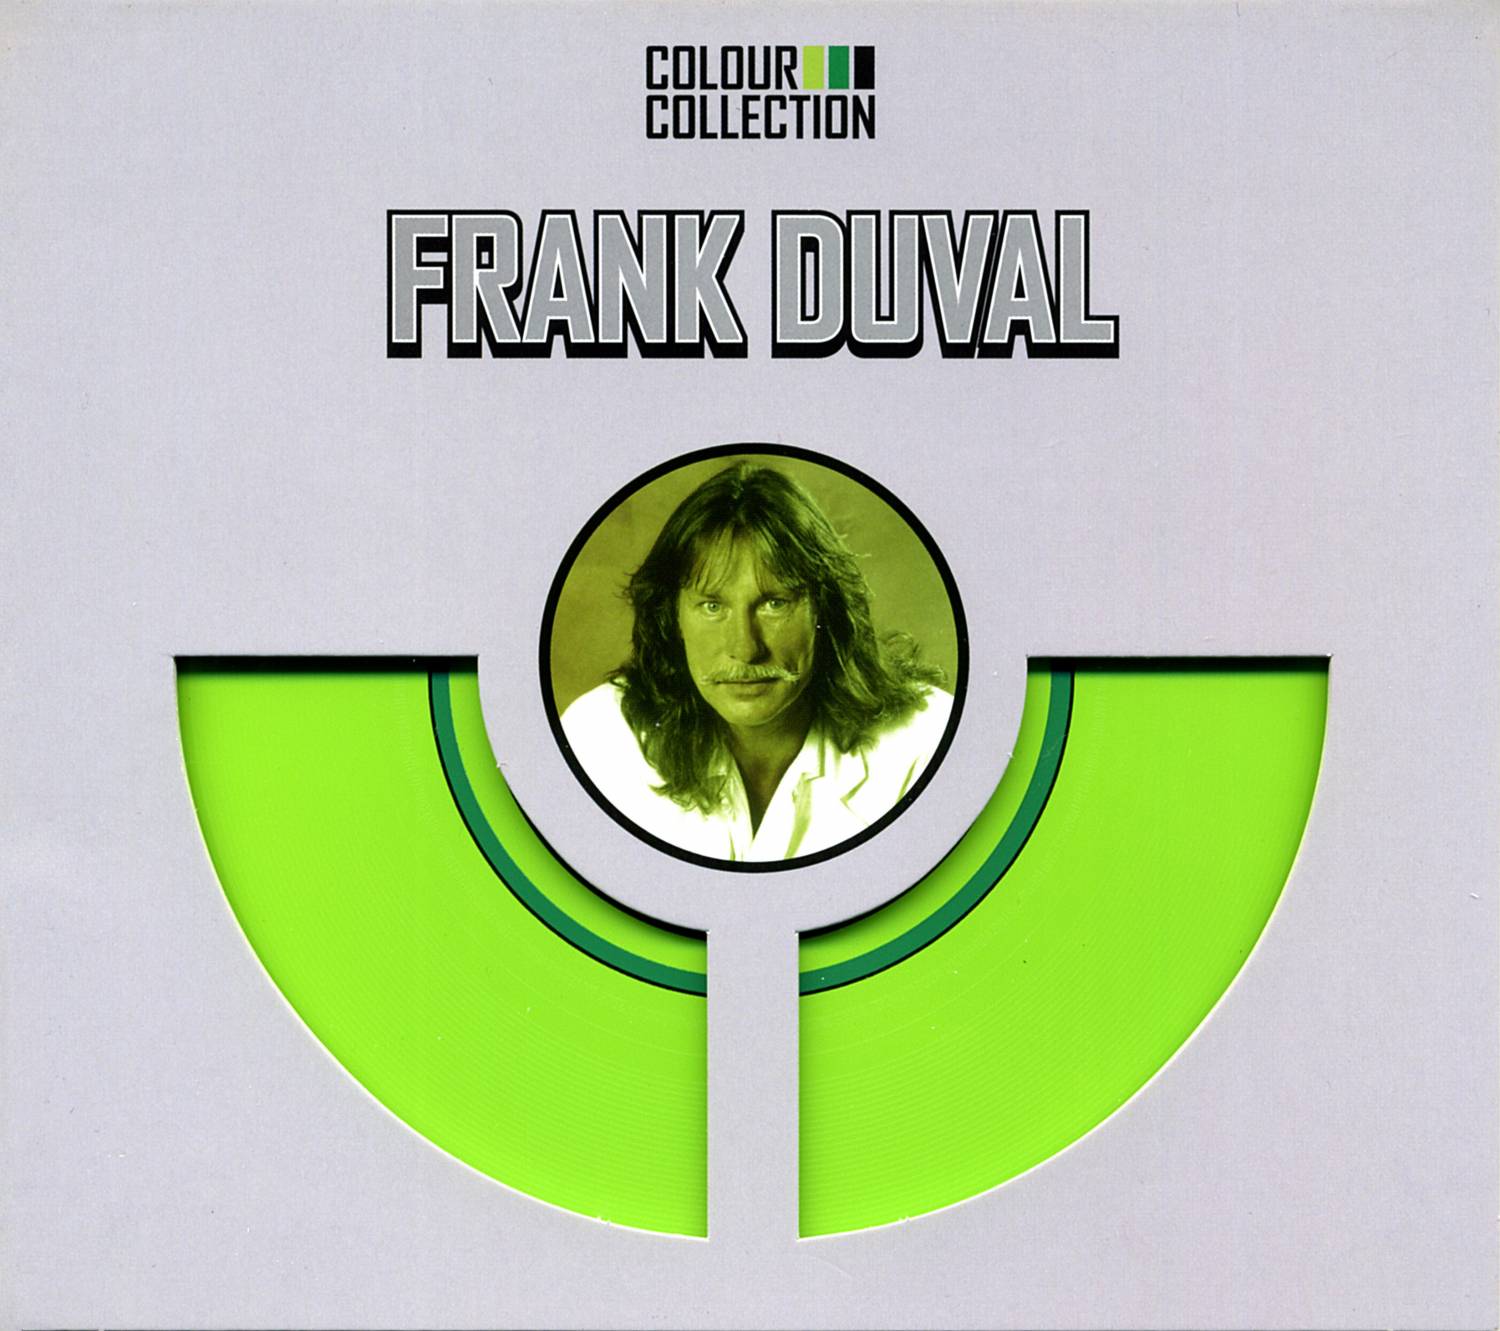  Frank Duval - Colour Collection (2006)